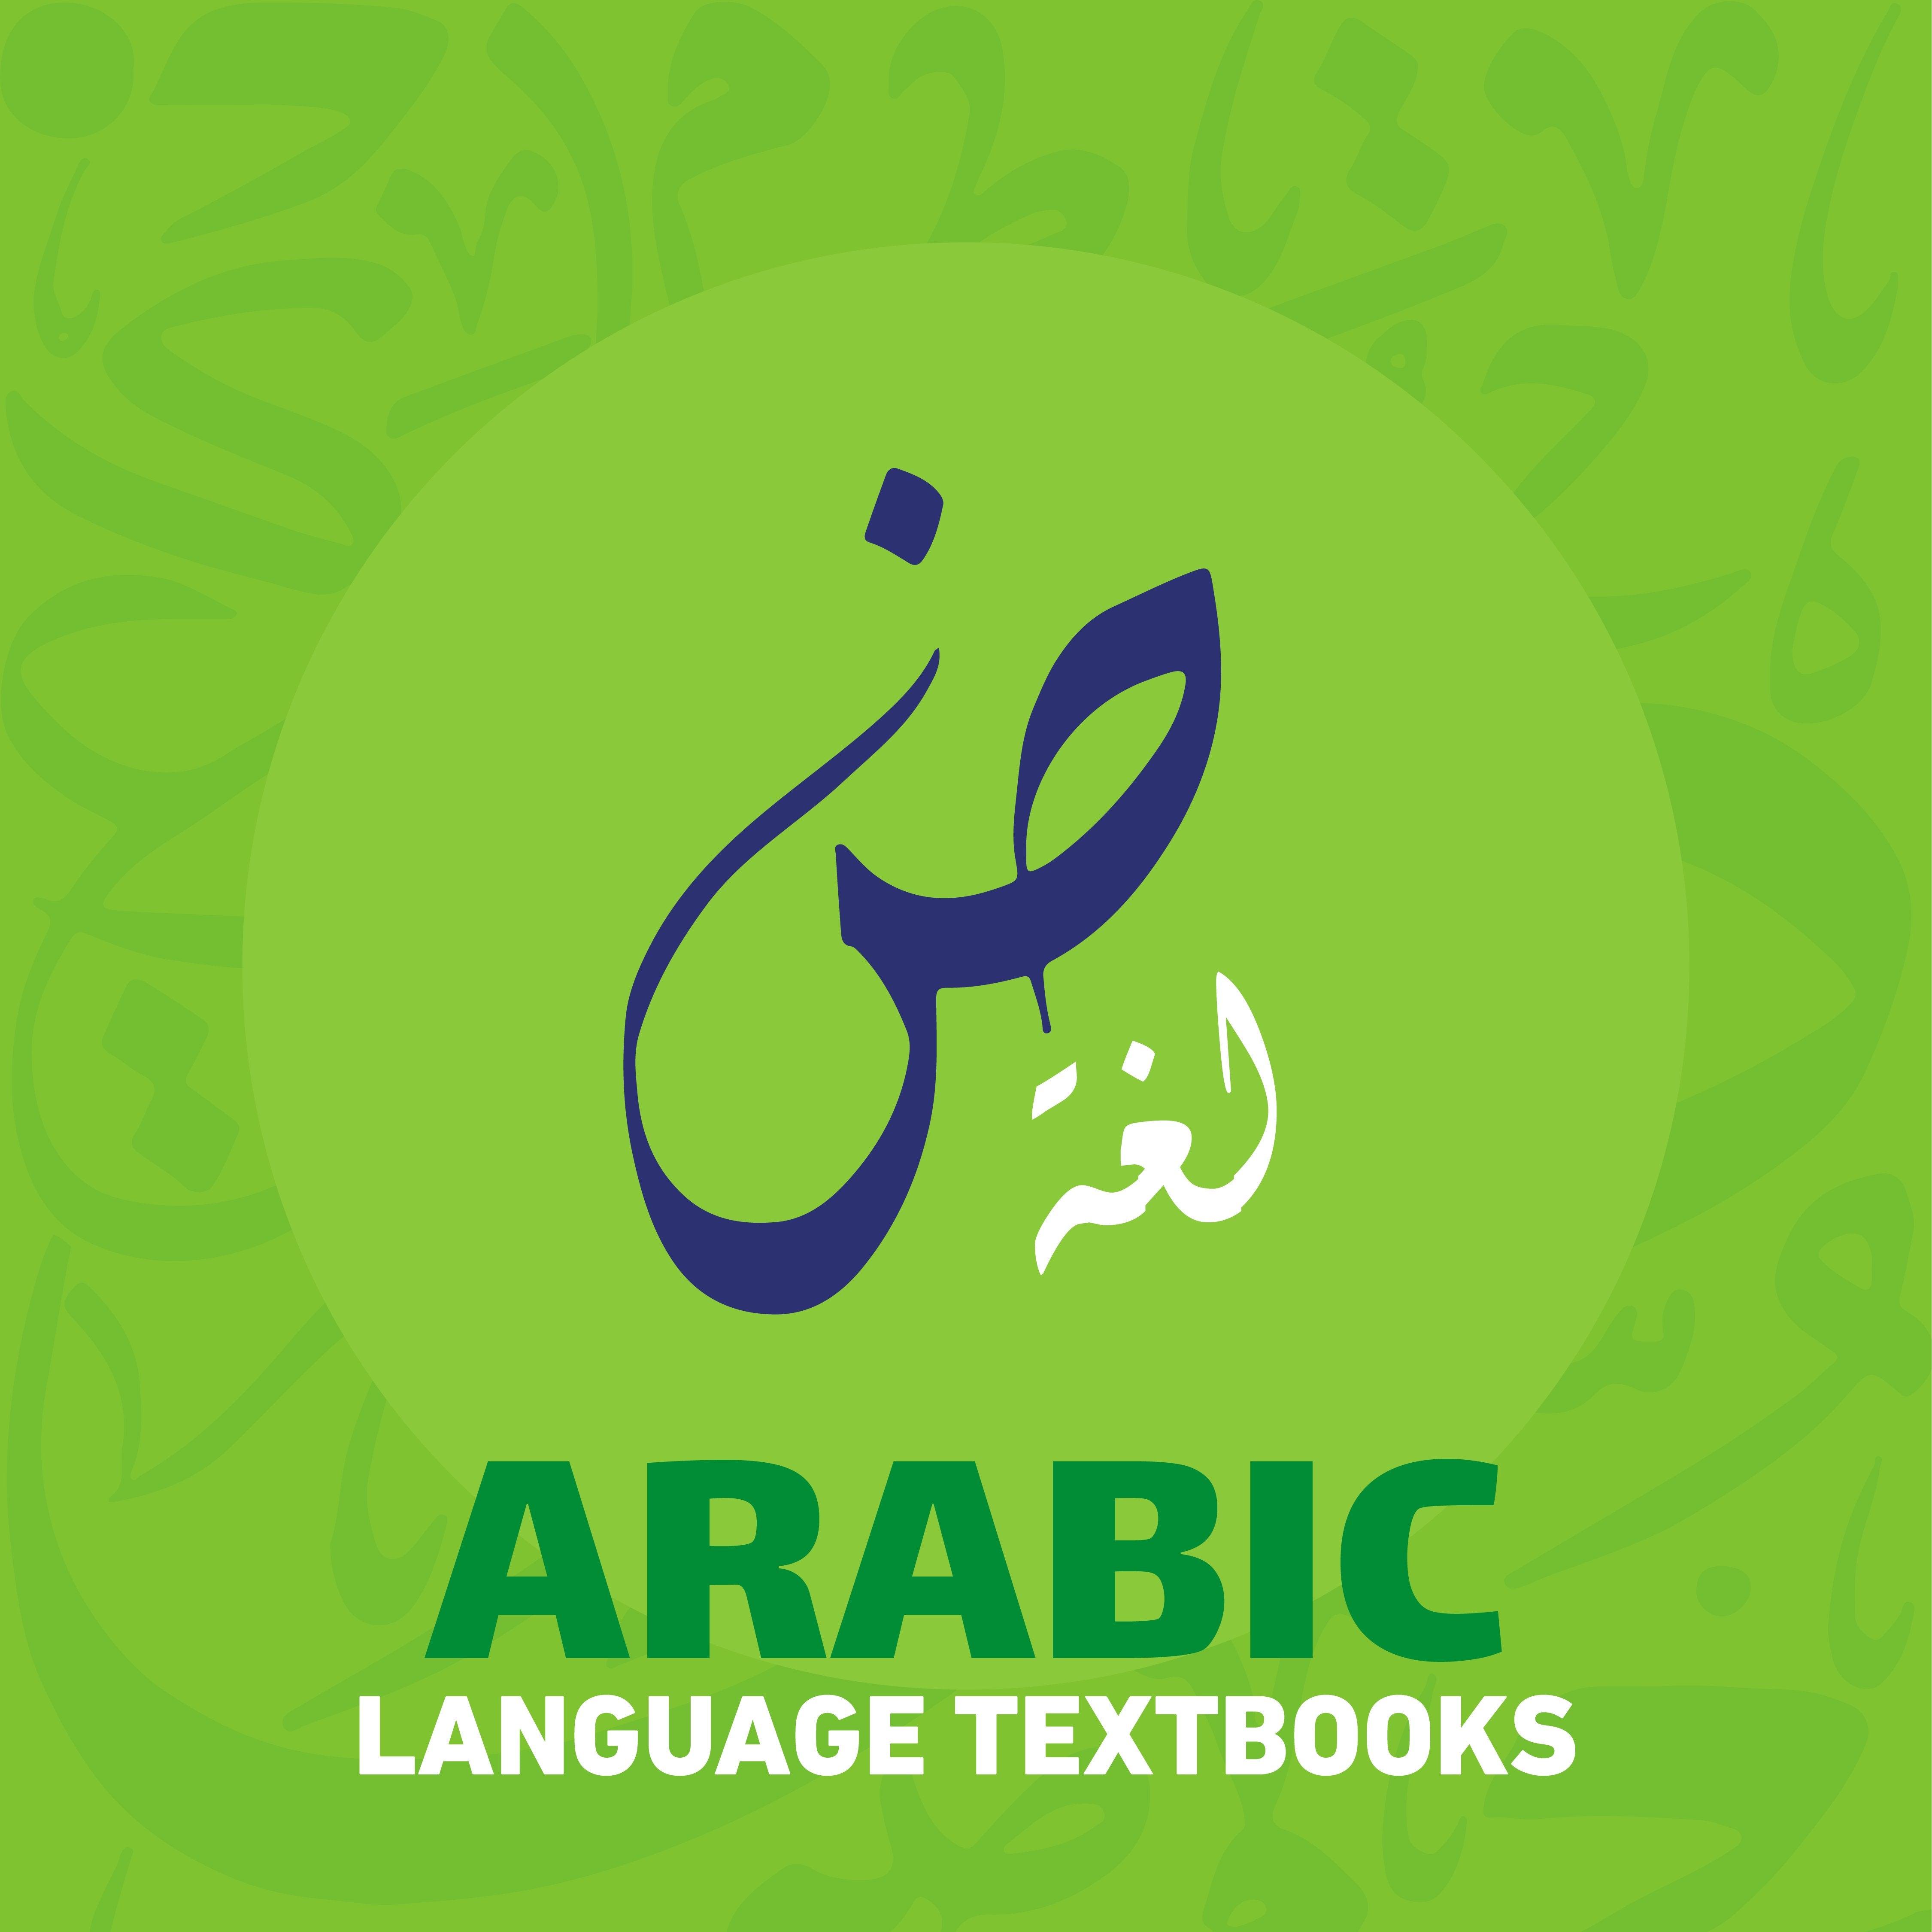 Arabic Language Textbooks